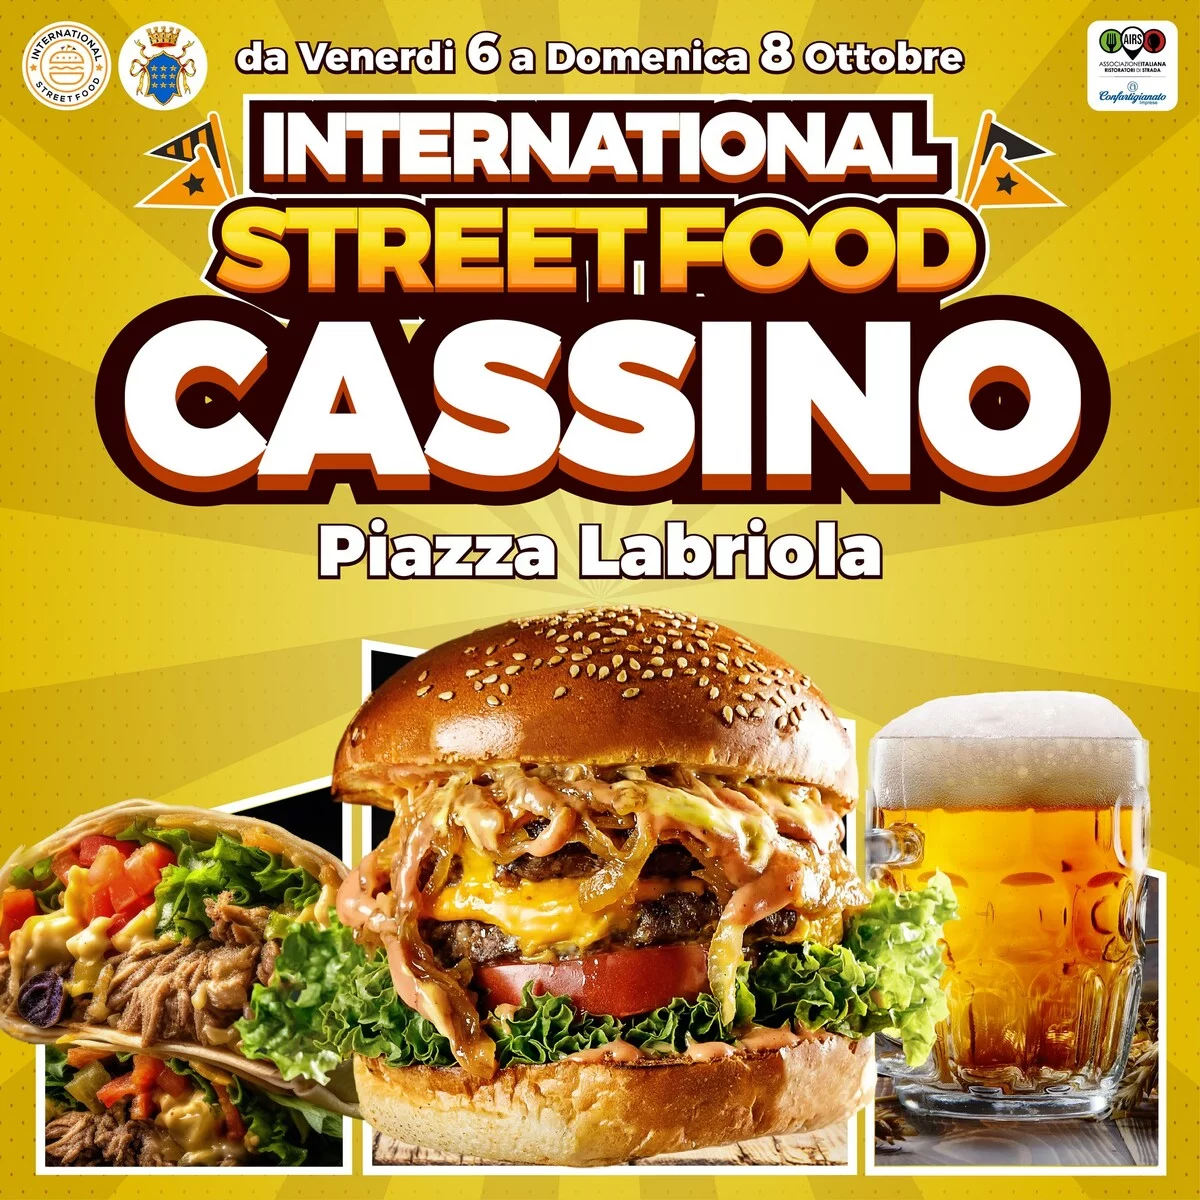 International Street Food - Cassino